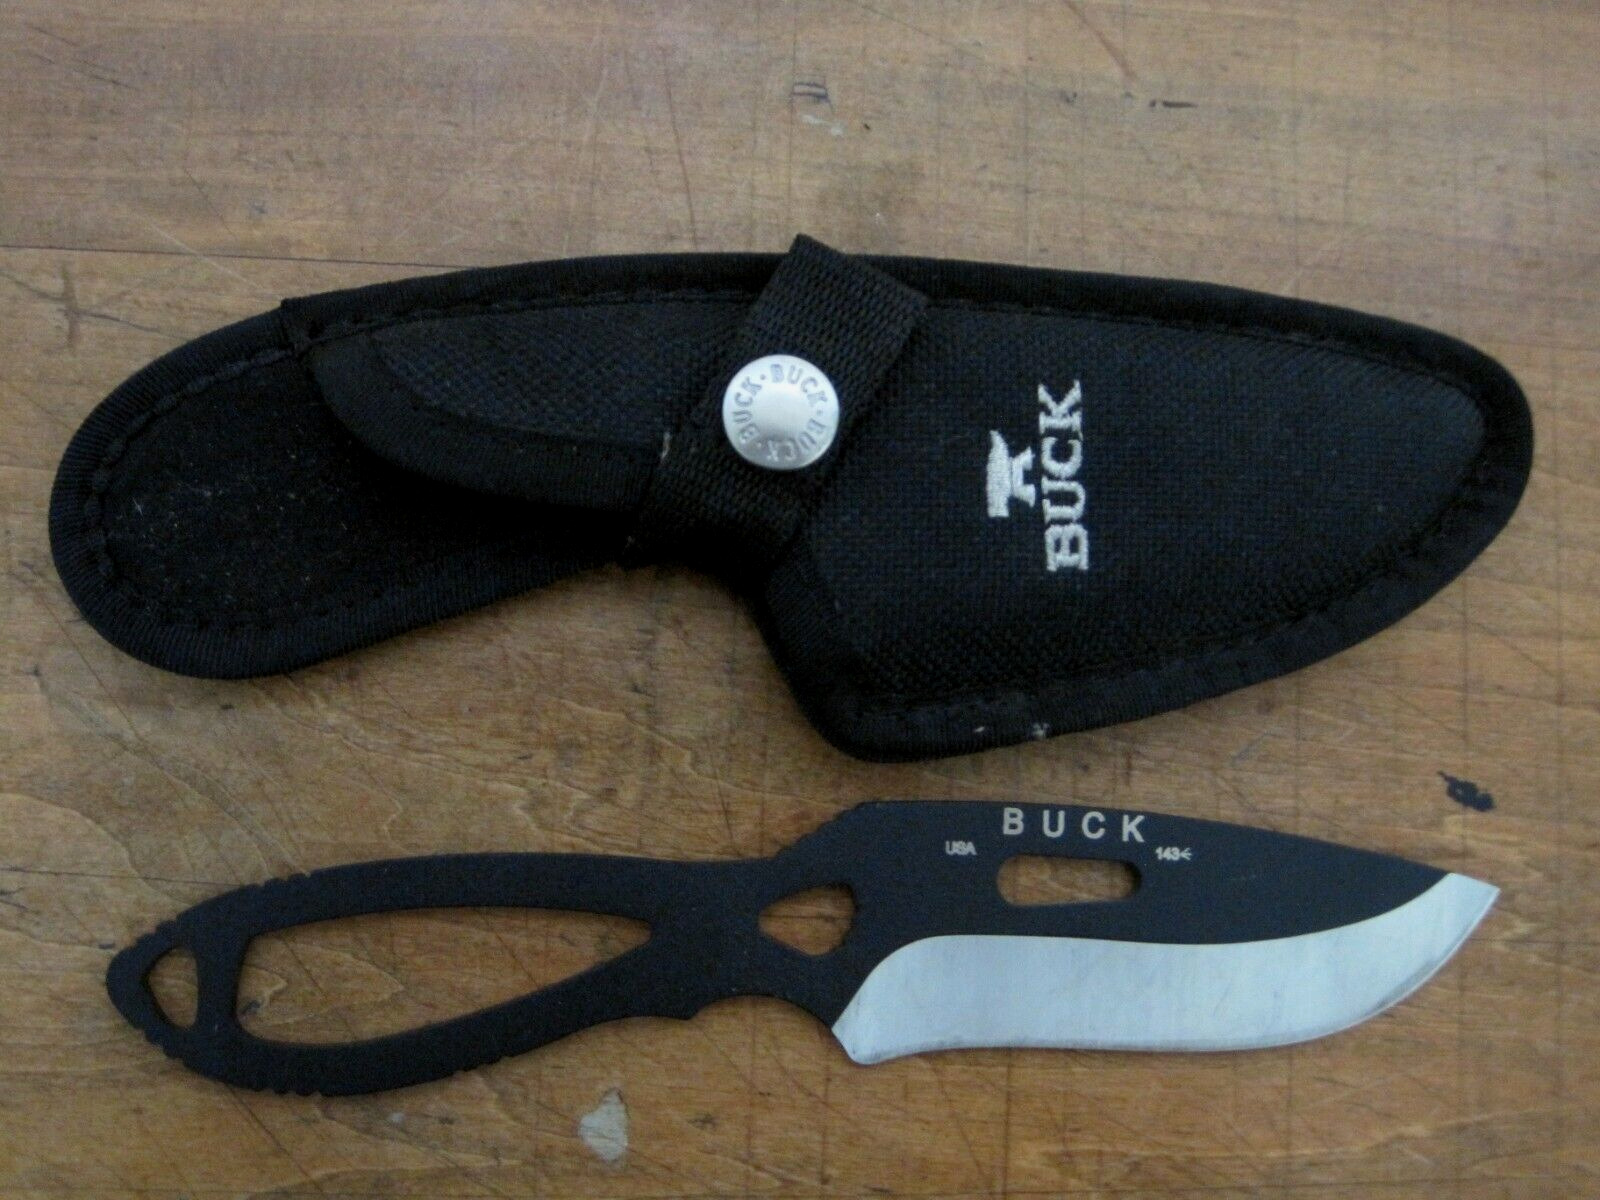 2010 BUCK Model 143 Made in USA Fixed Blade Knife w/Original Sheath